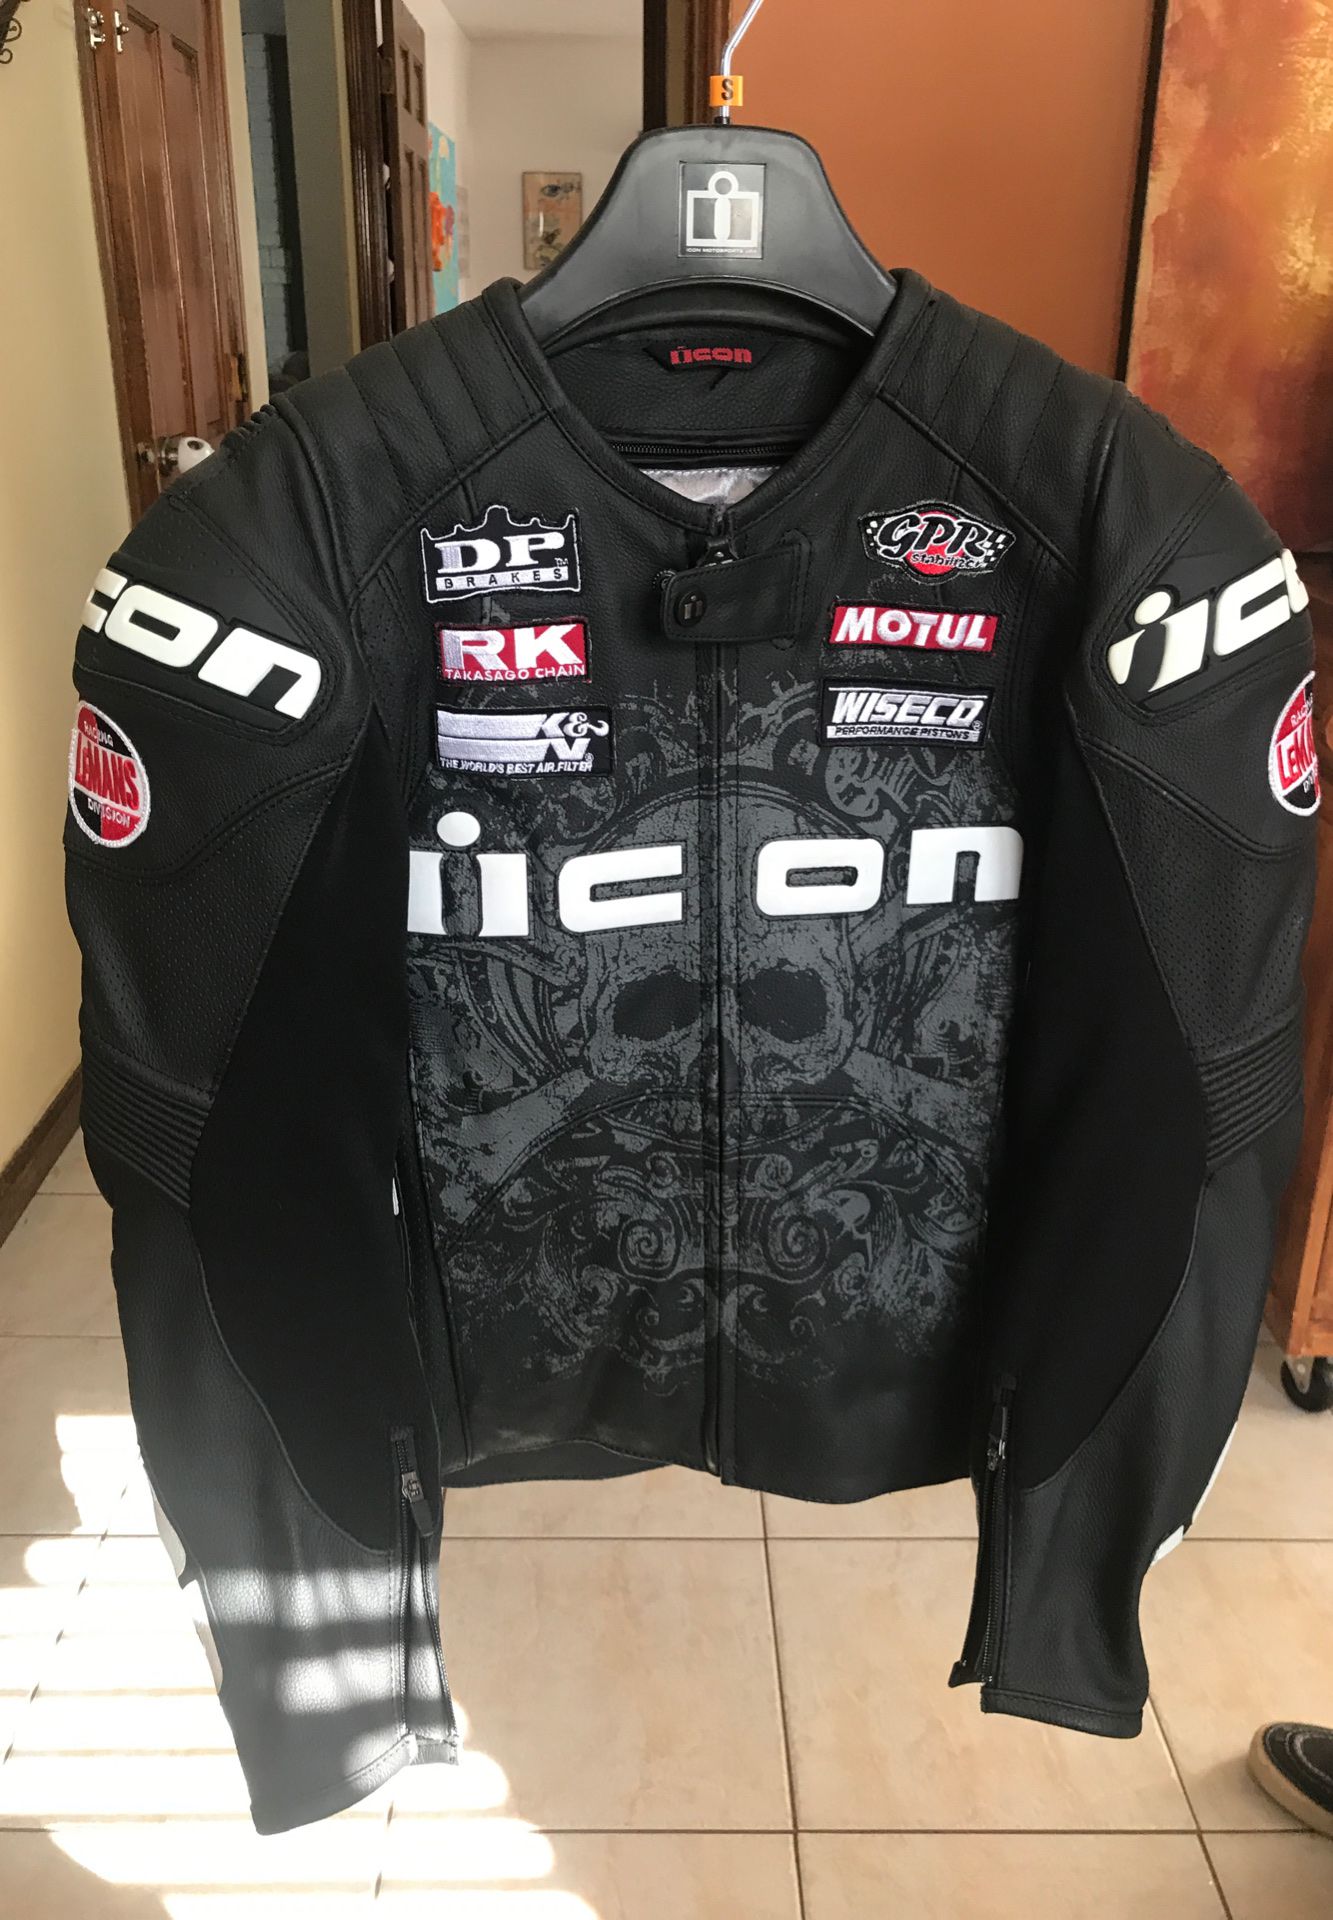 Icon motorcycle jacket